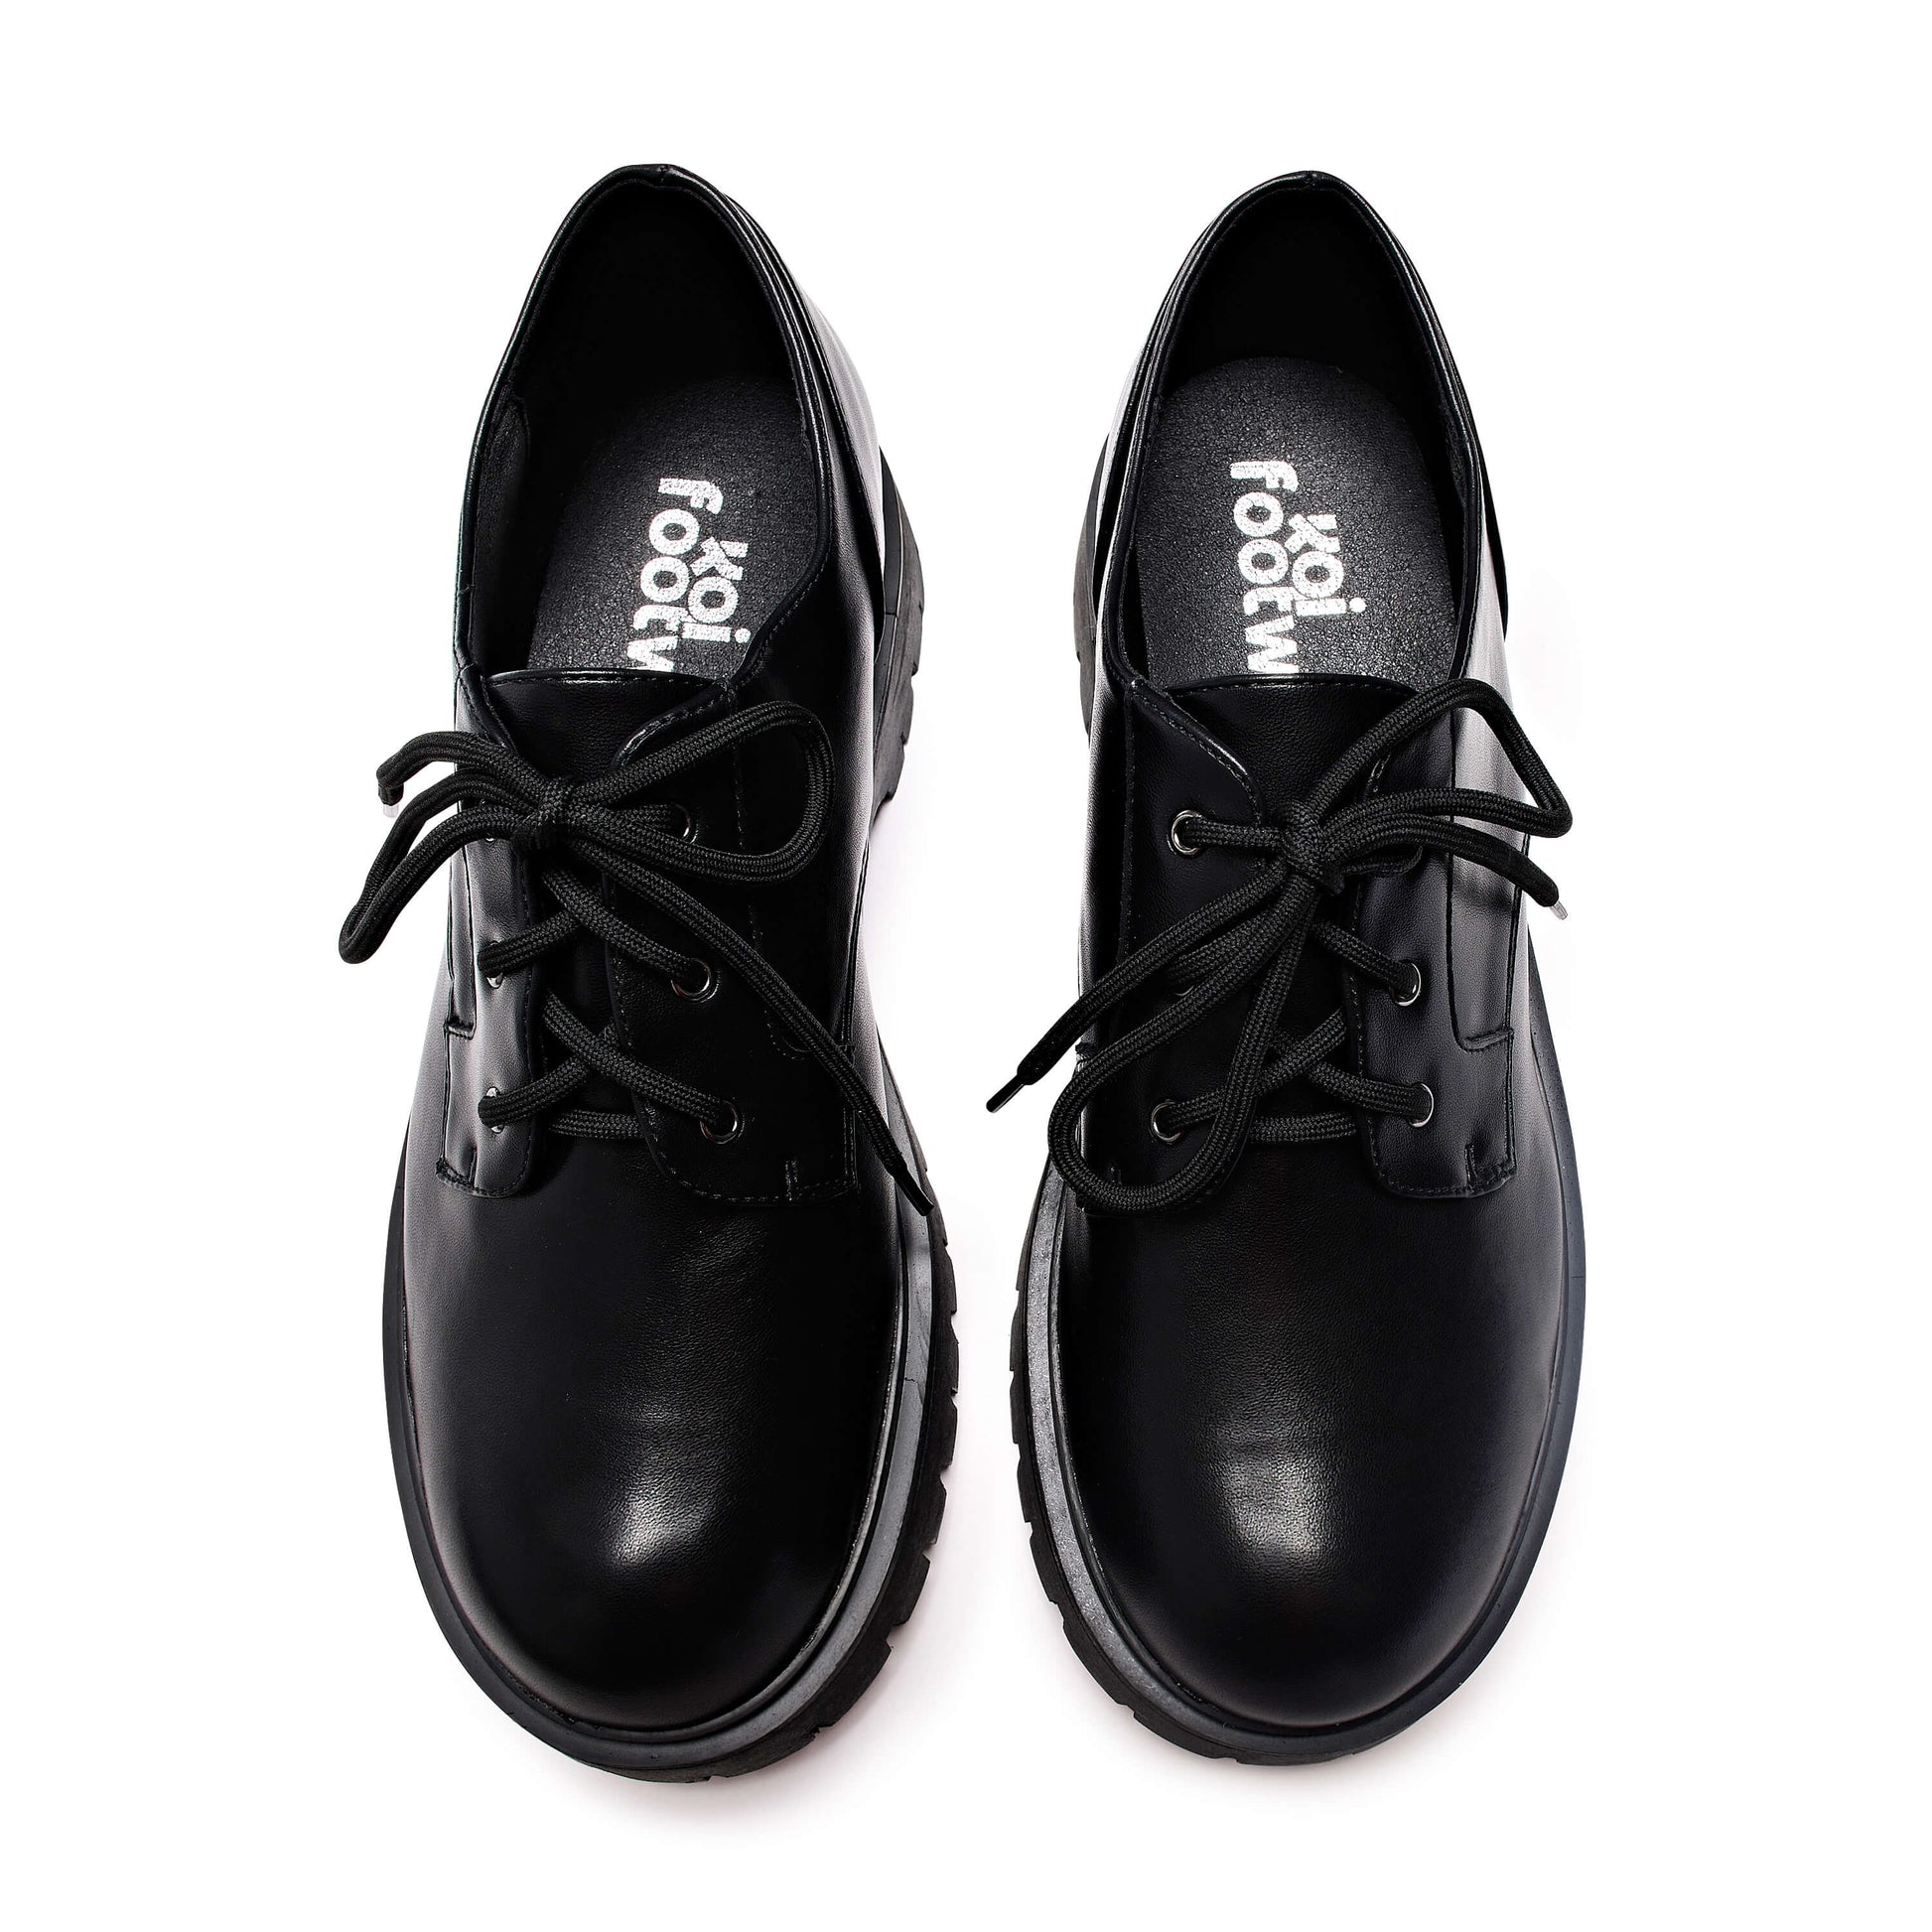 Pinemoon Men's Black Lace Up Shoes - Shoes - KOI Footwear - Black - Top View